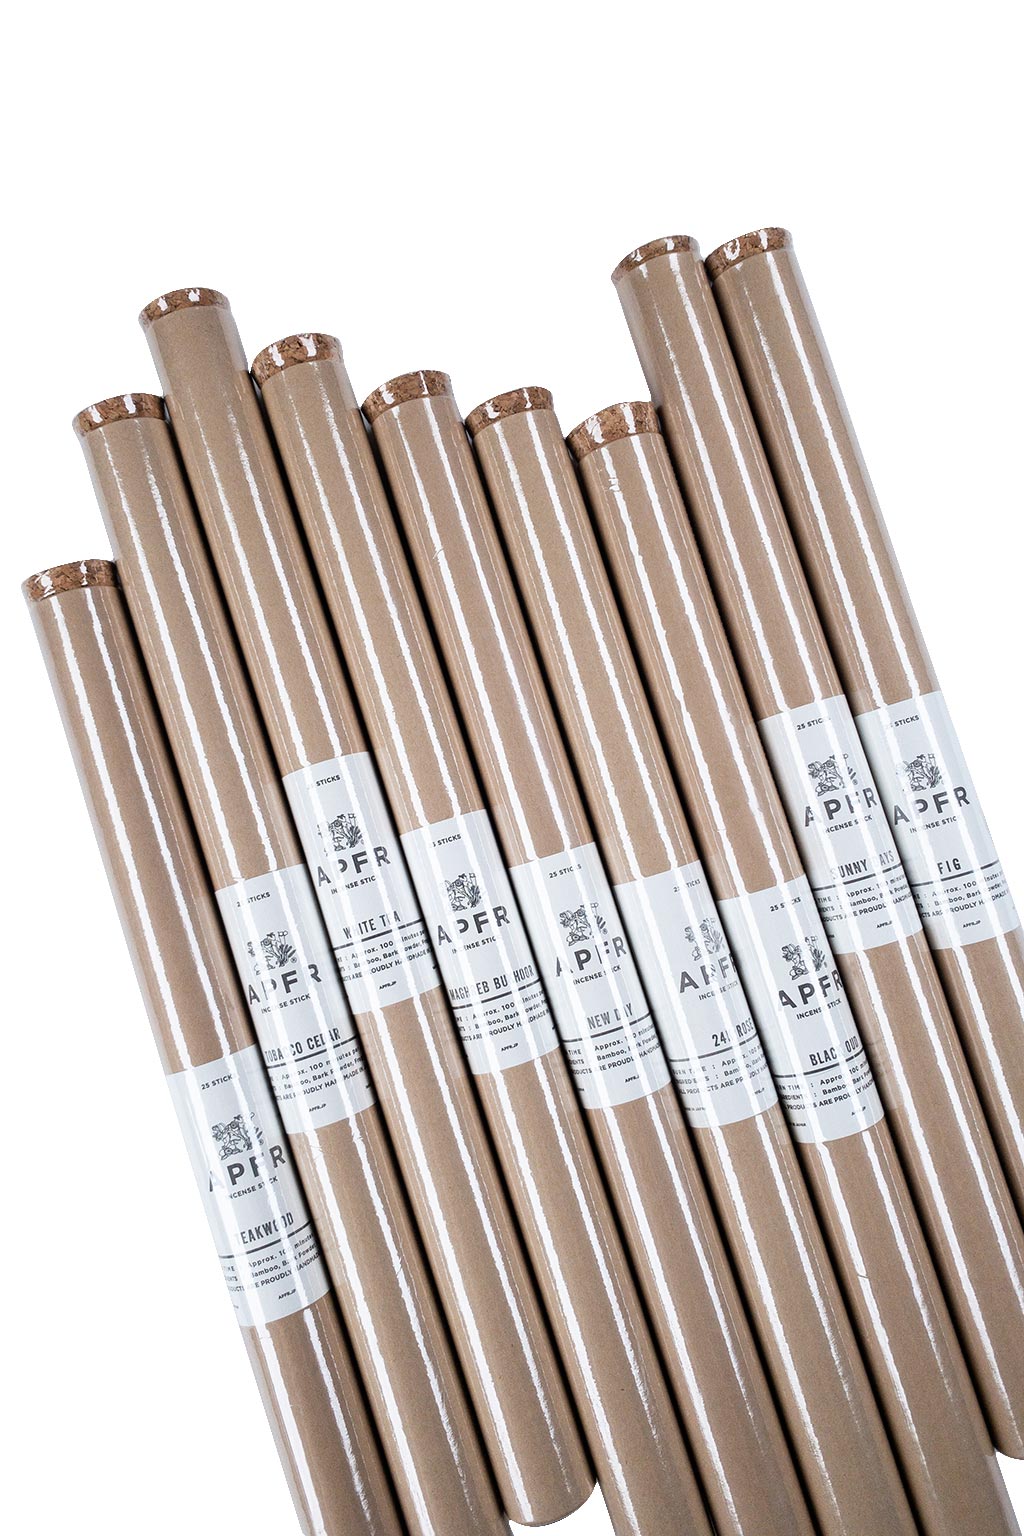 APFR Incense Sticks 25 sticks